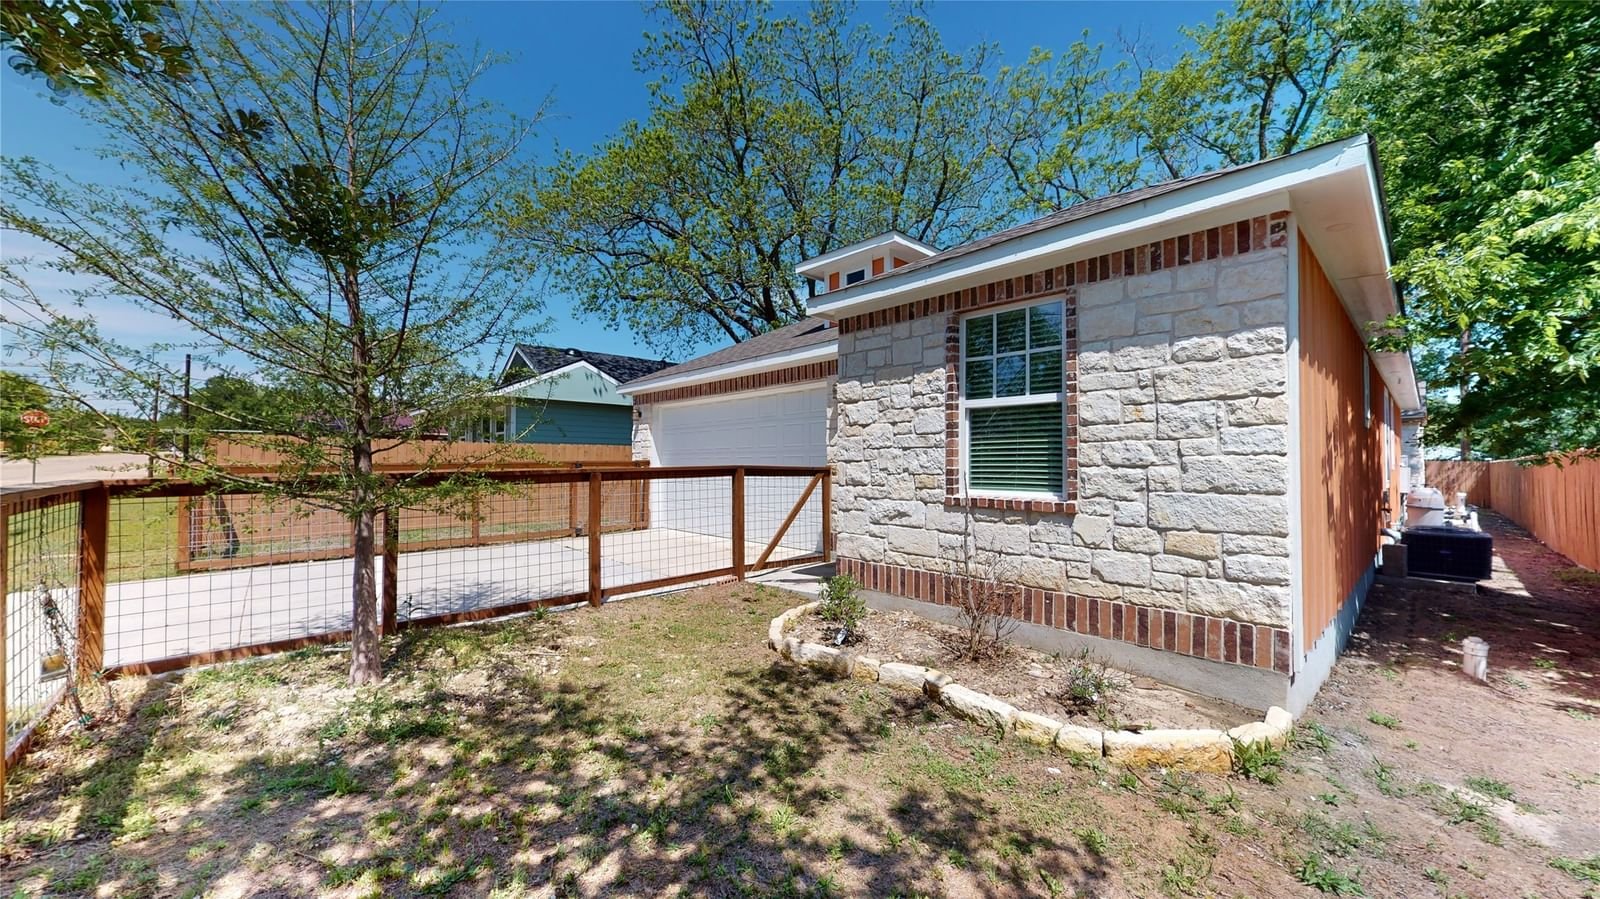 Real estate property located at 632 Polk, Lee, Ot Giddings, Giddings, TX, US